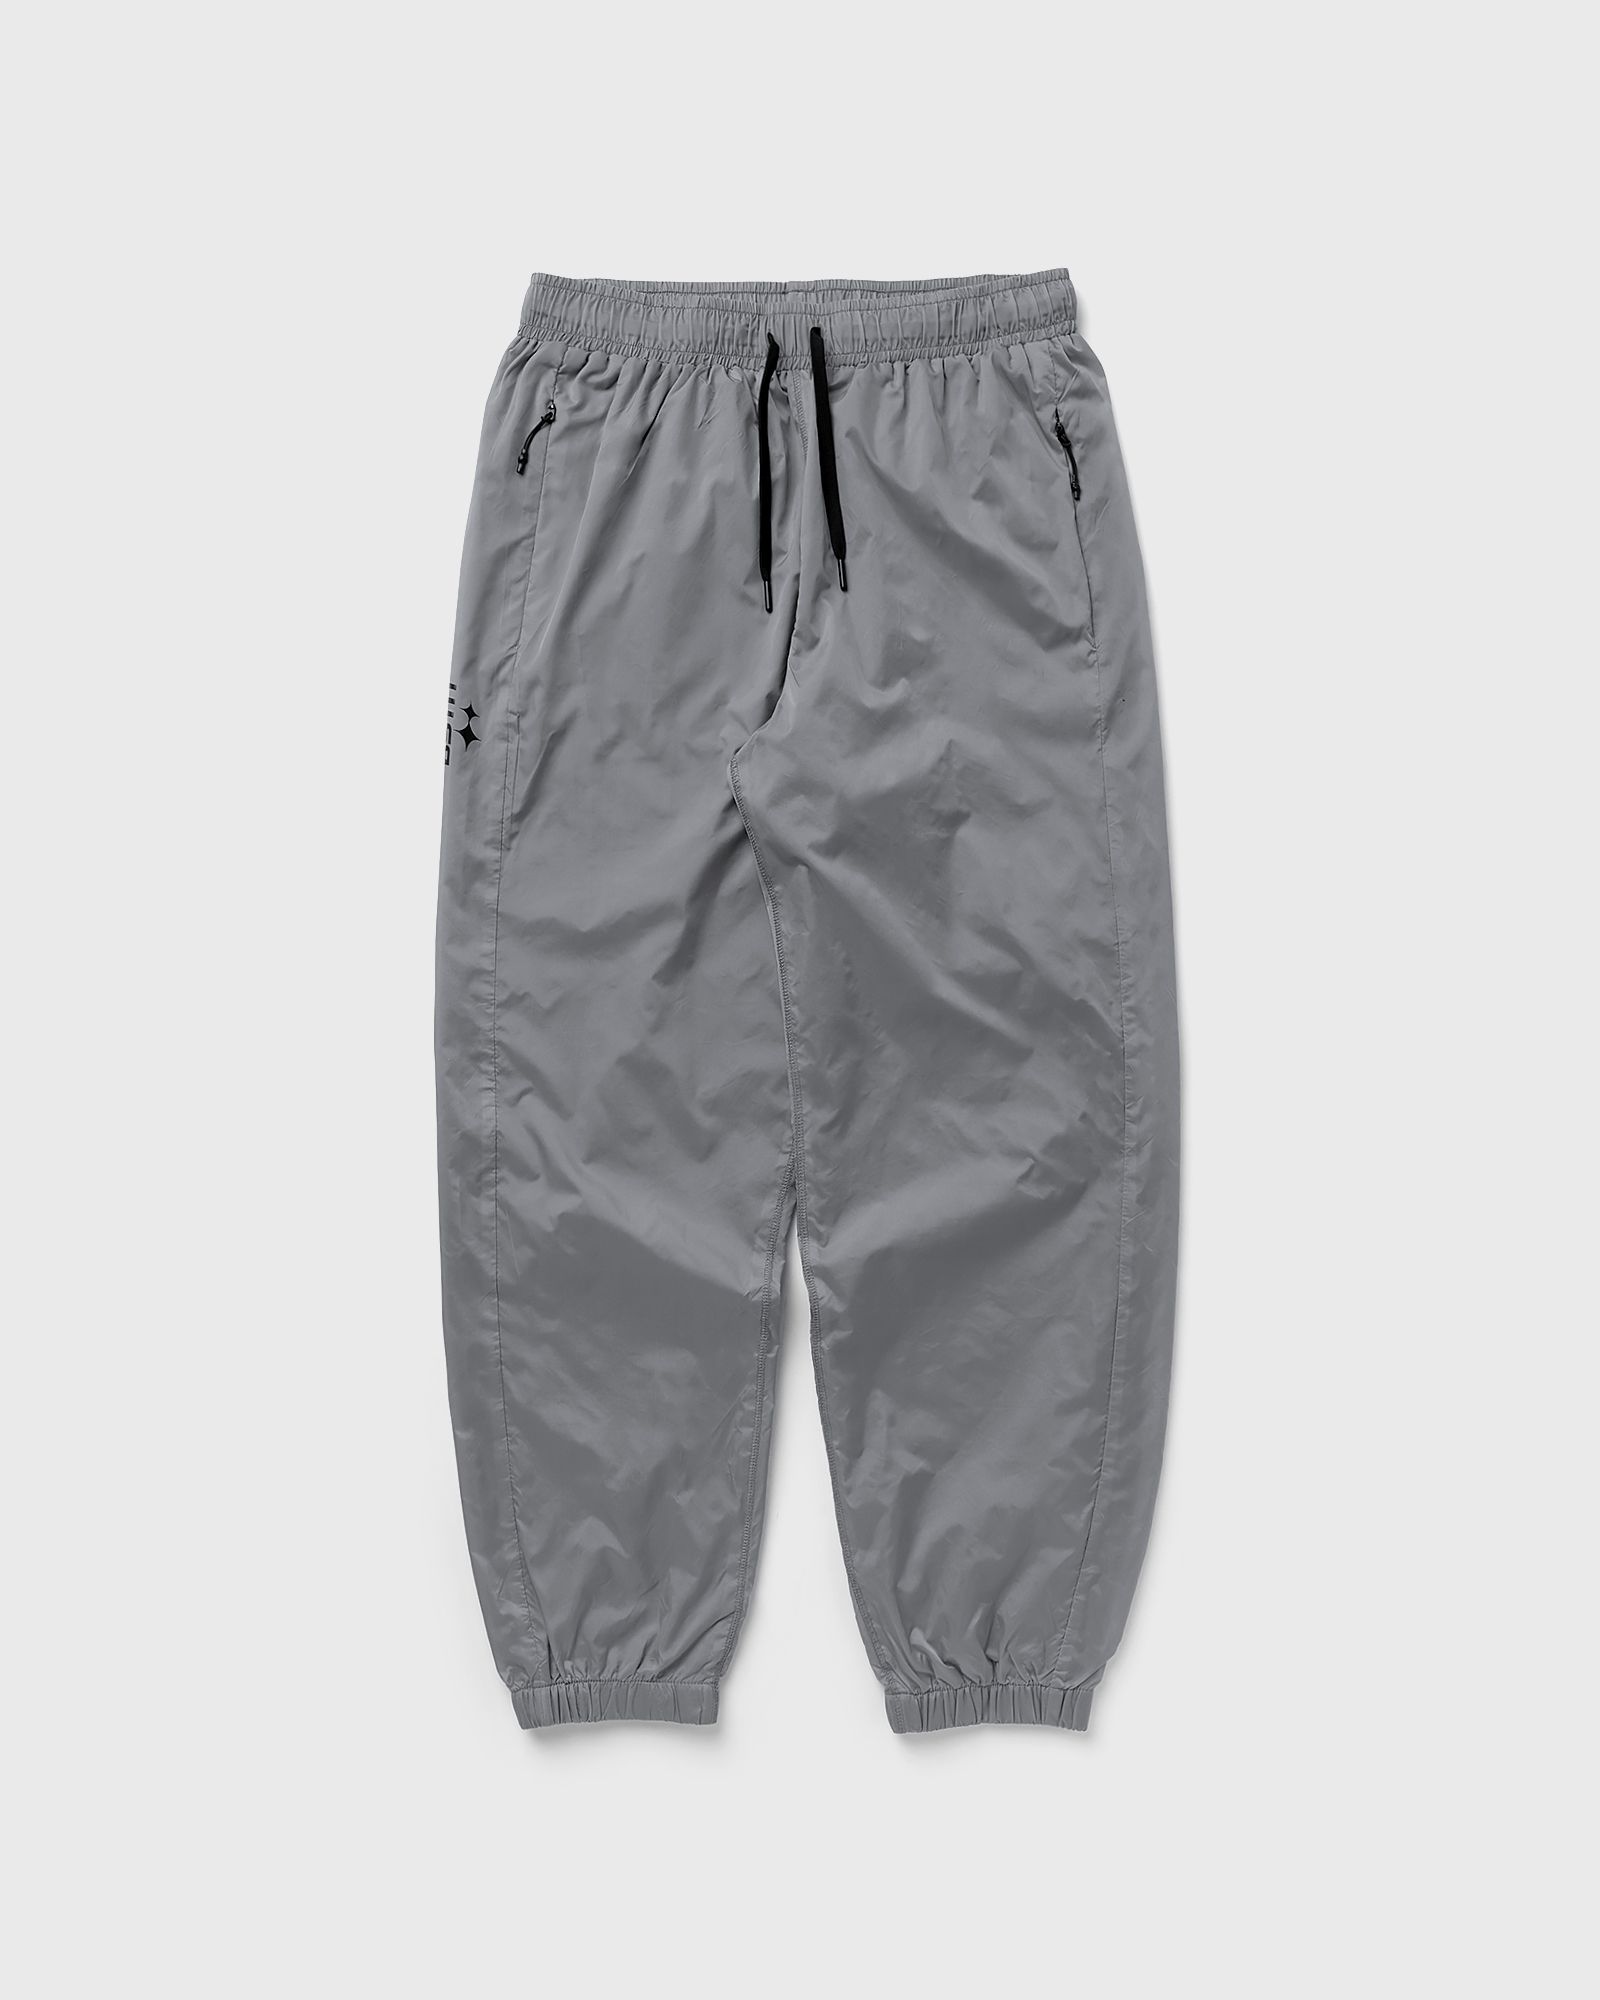 BSTN Brand - track pants men sweatpants|track pants grey in größe:xl